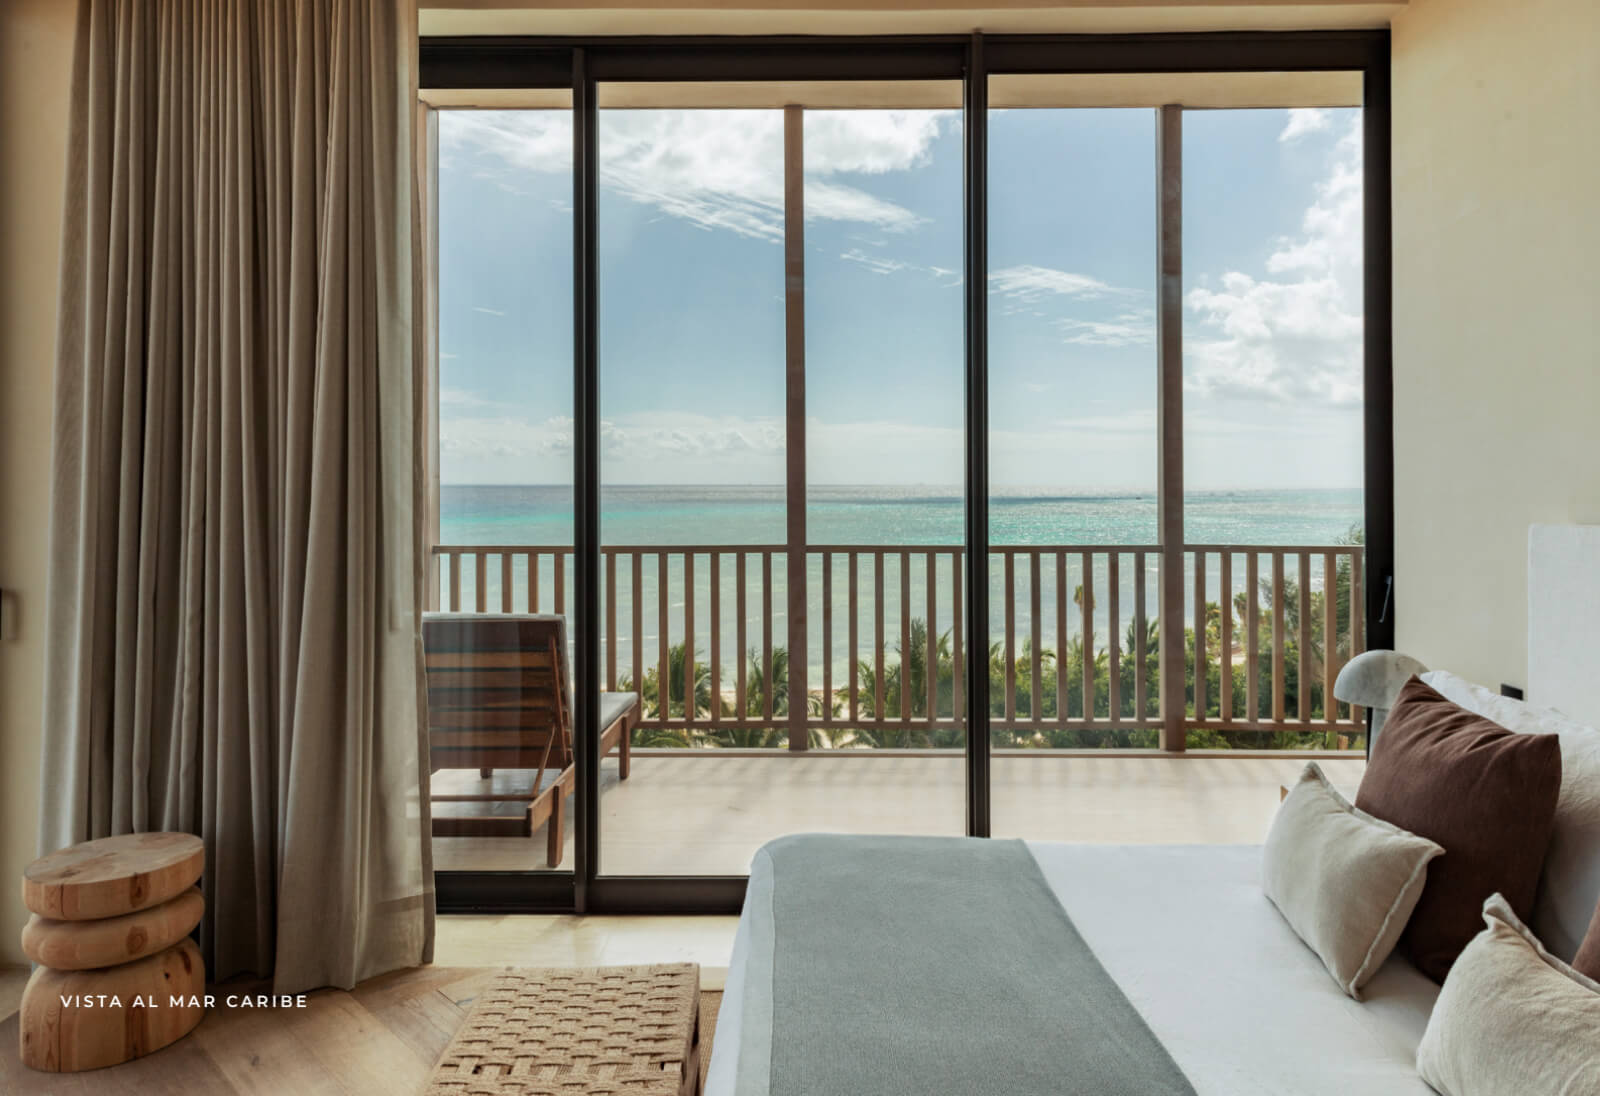 Penthouse frente al mar, con alberca, pre-venta Playa del Carmen.